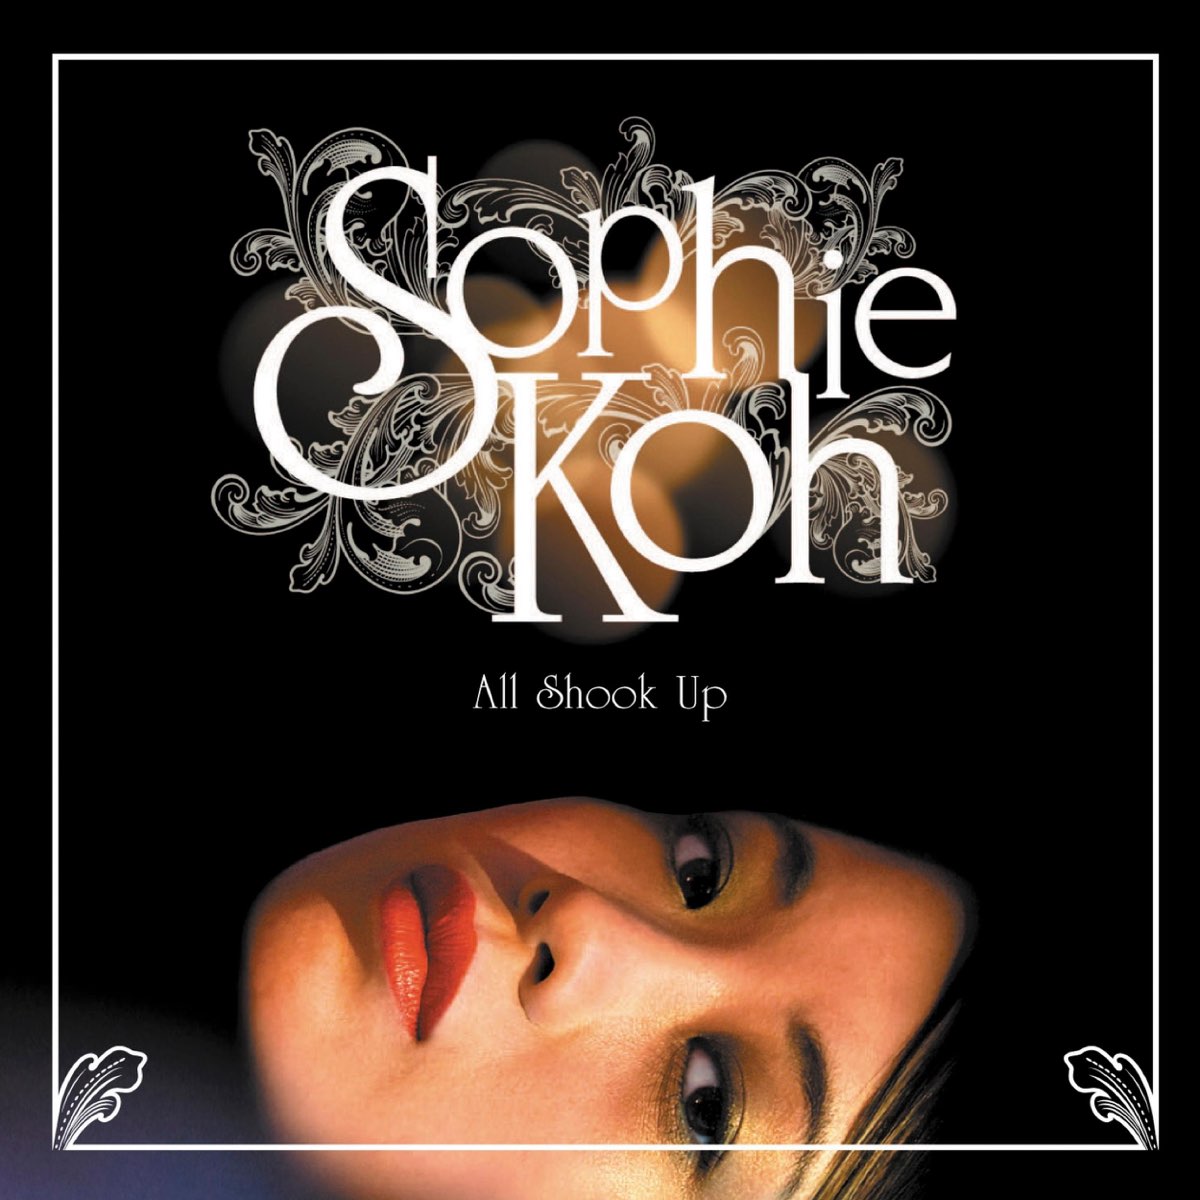 All shook up. Sophie альбом. Софи Найт. Альбомы Софи Зион. Обложка альбома. Sophie - Soft time.